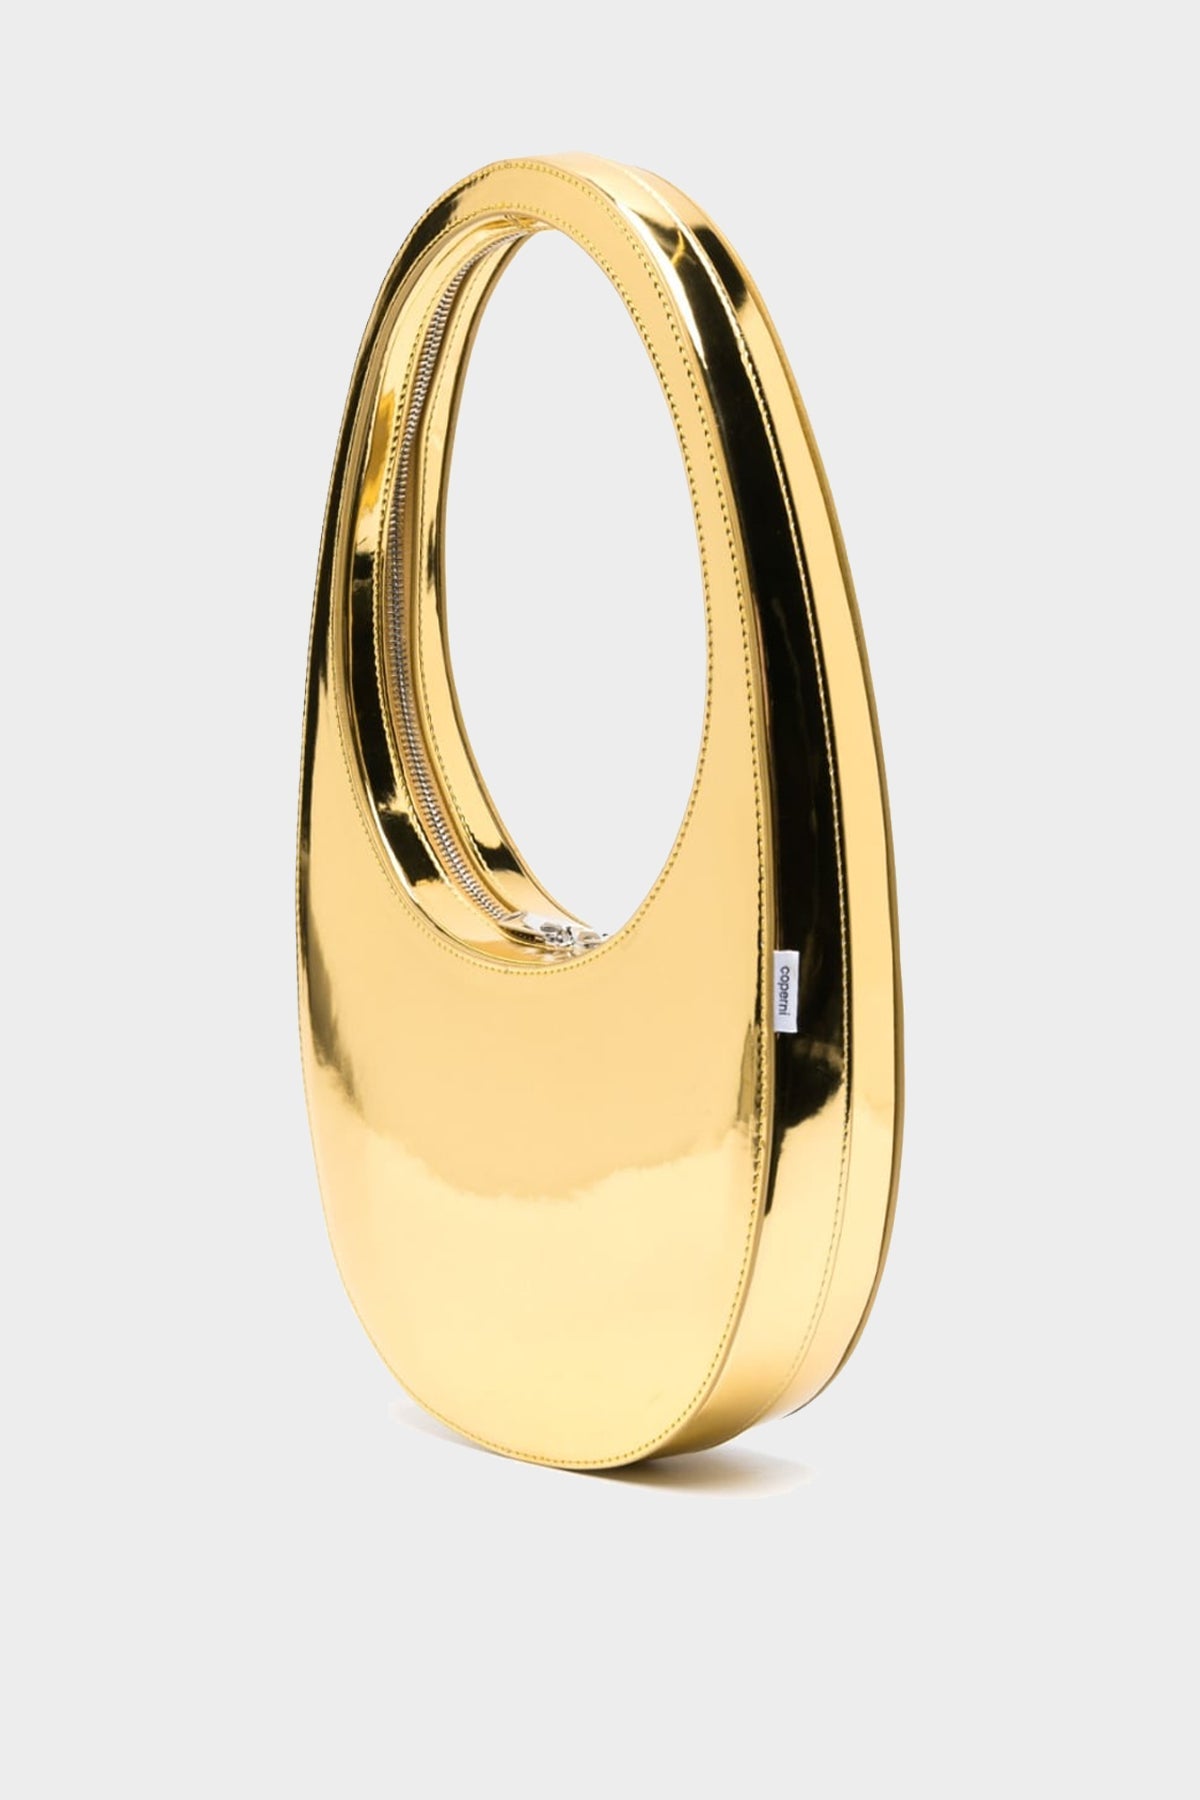 Metallic Swipe Bag in Gold - shop-olivia.com